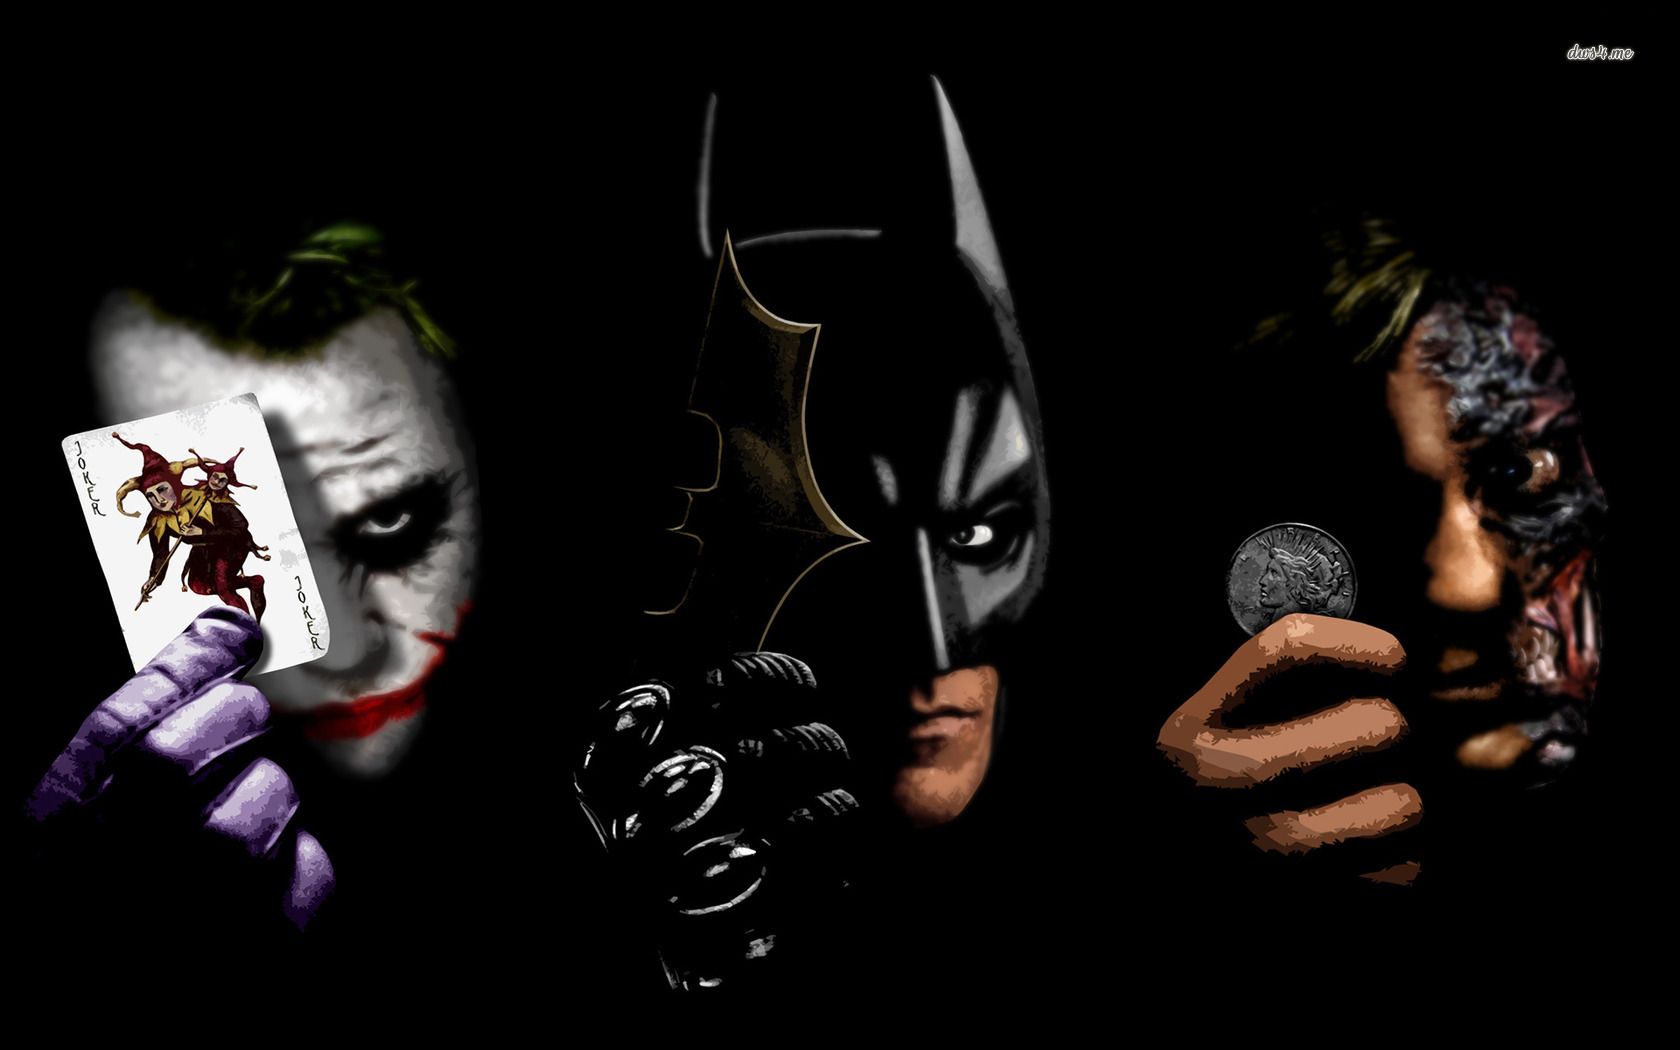 Batman vs joker wallpaper